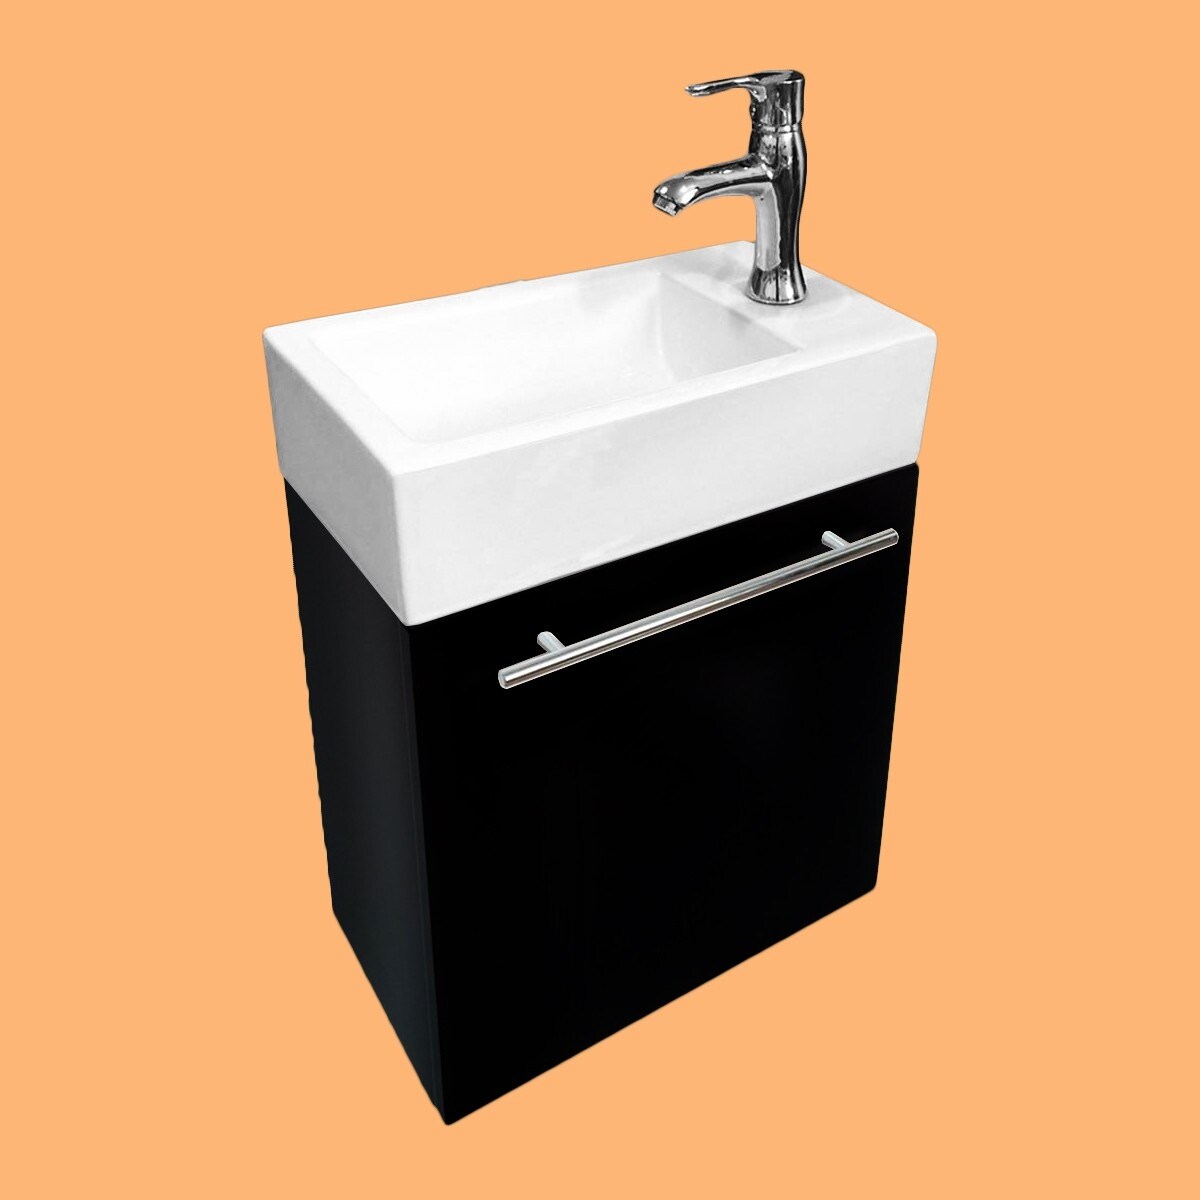 Renovator S Supply Small Wall Mount Bathroom Vanity Cabinet Sink Faucet Drain